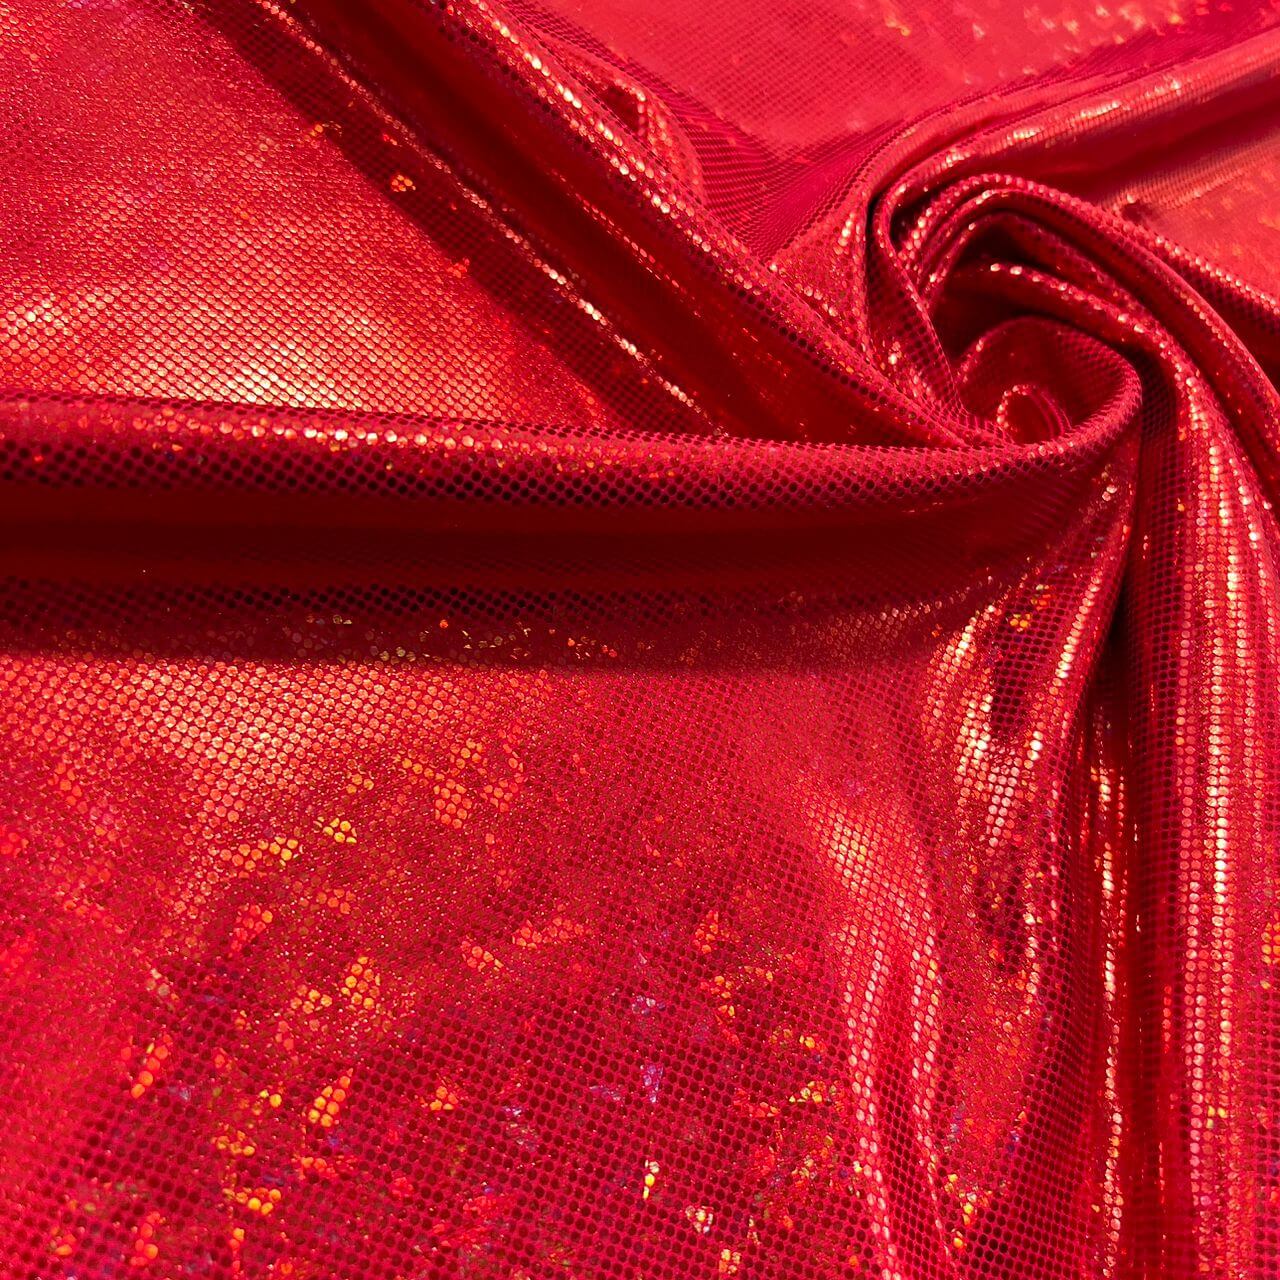 Vibrant Red Broken Glass Hologram Nylon Lycra Spandex Fabric 4 Way